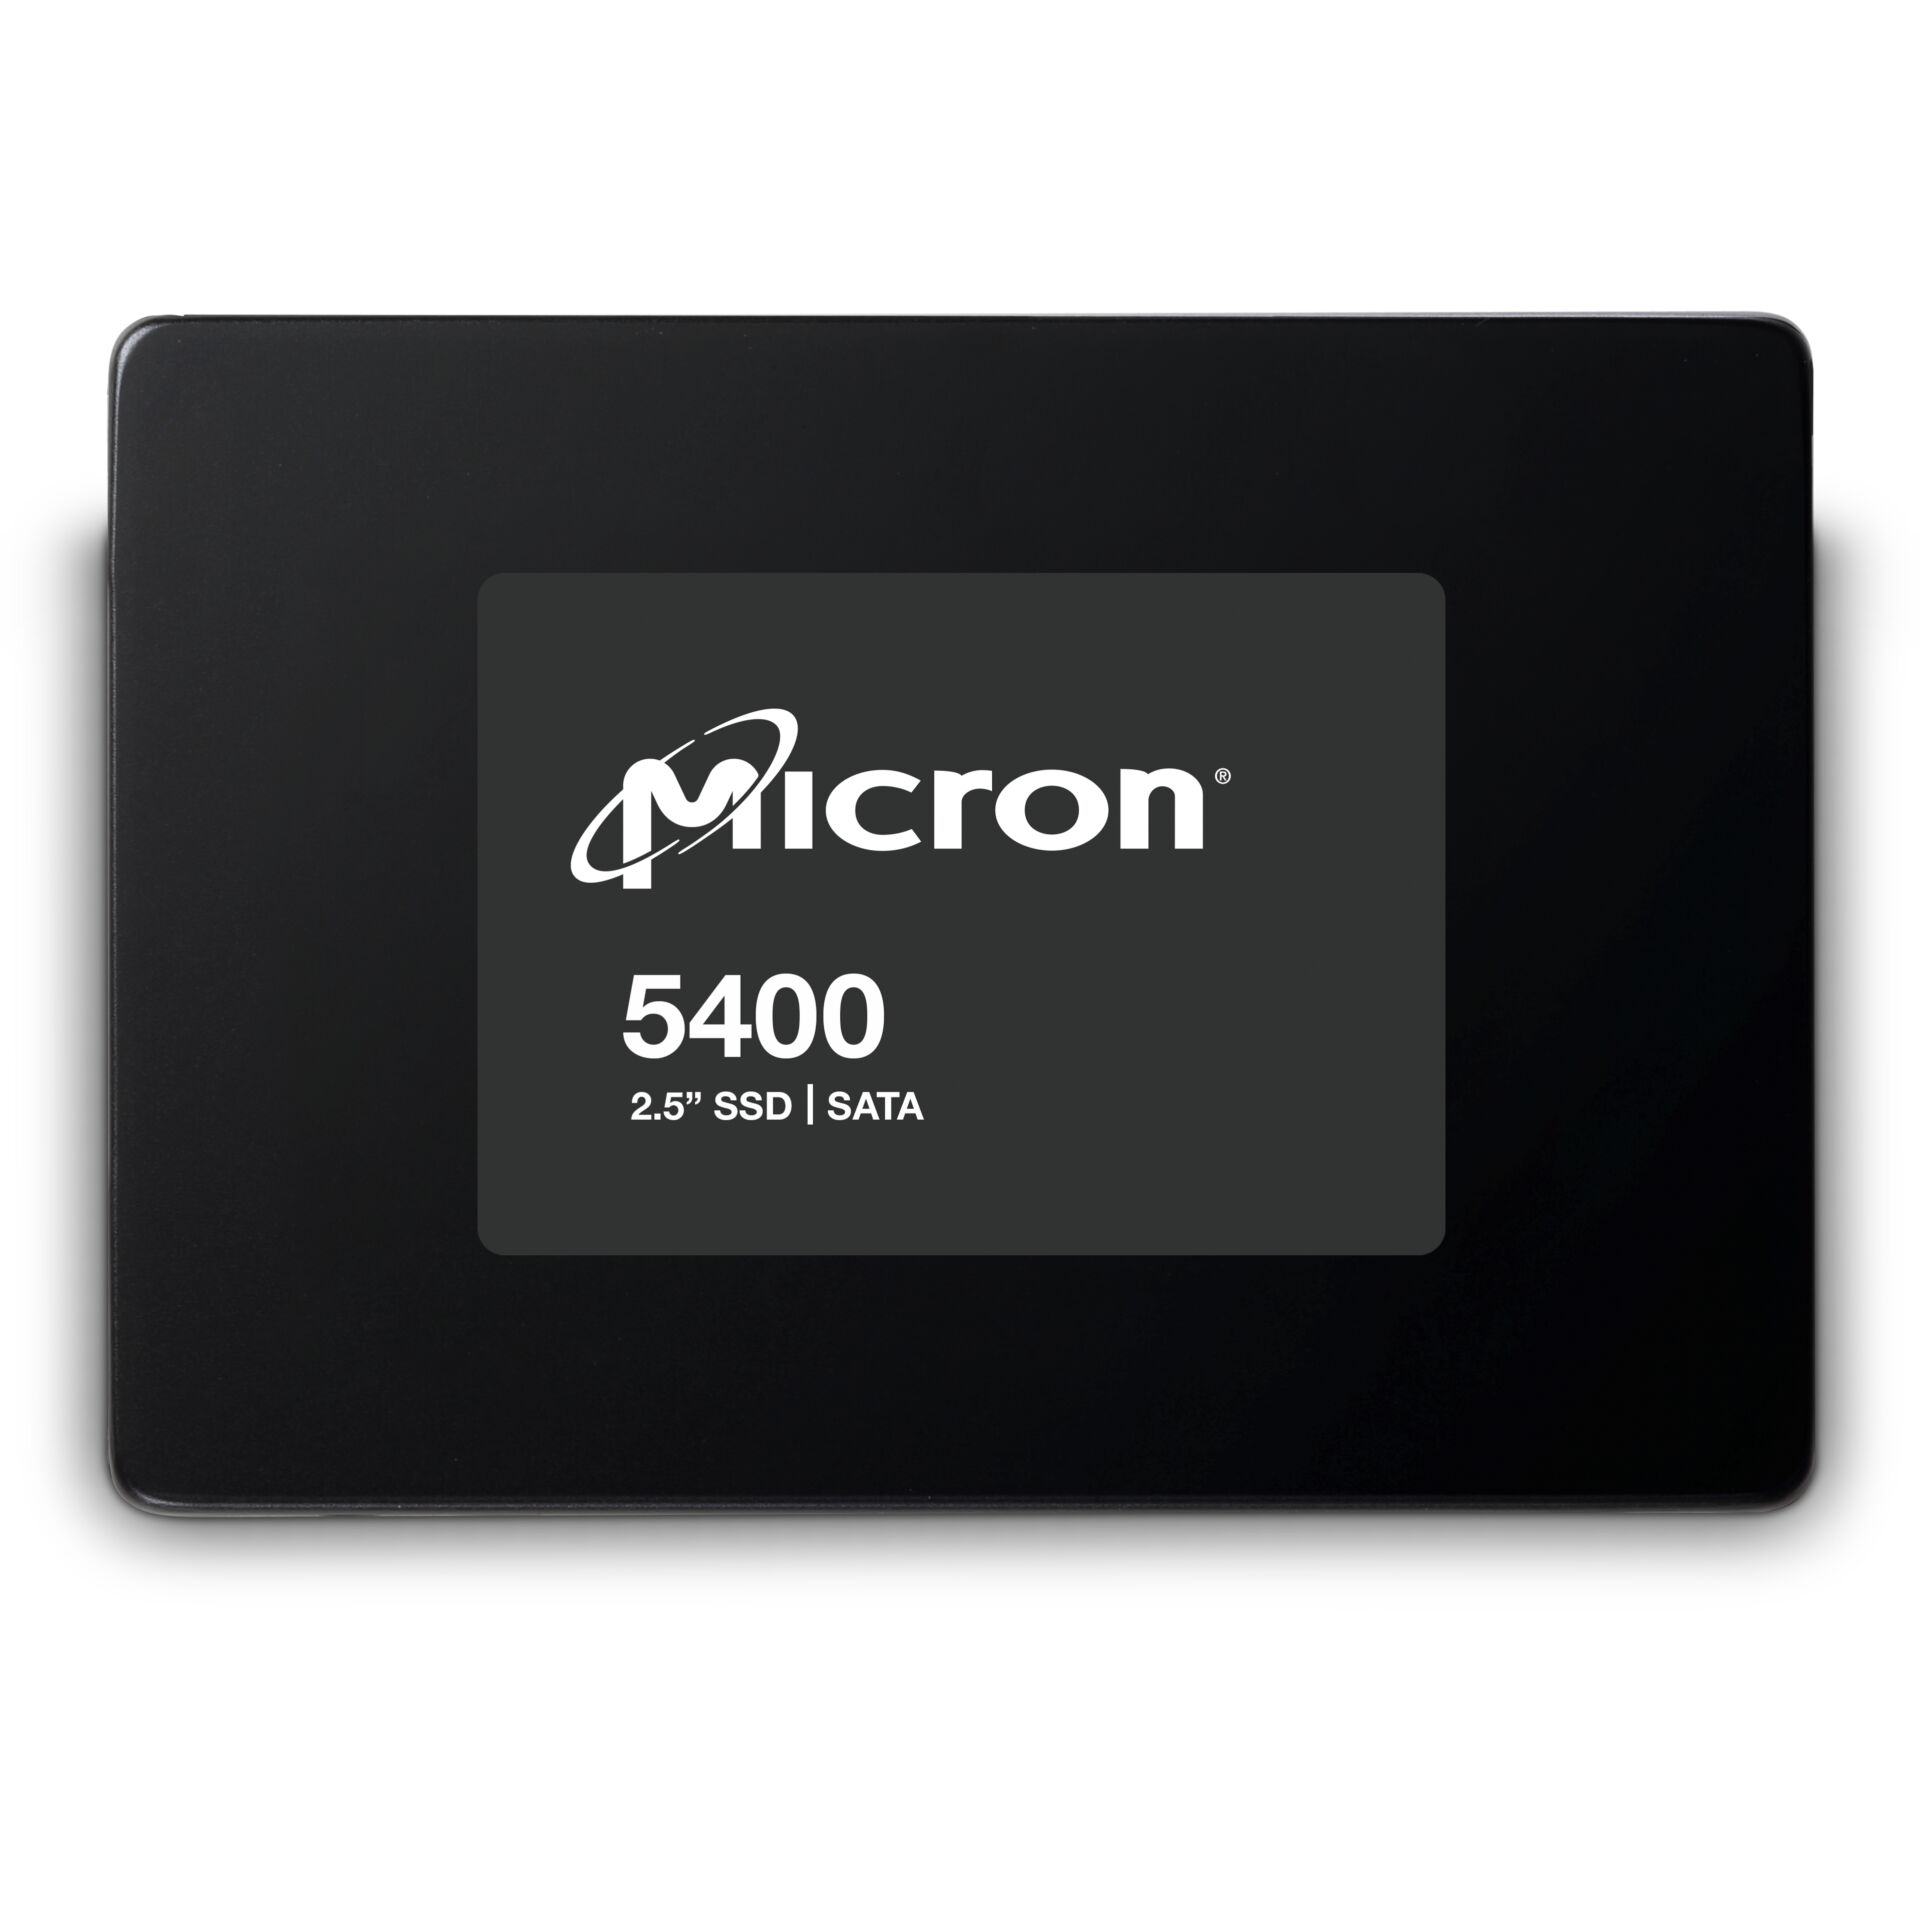 Micron 5400 PRO 480GB SATA 2.5